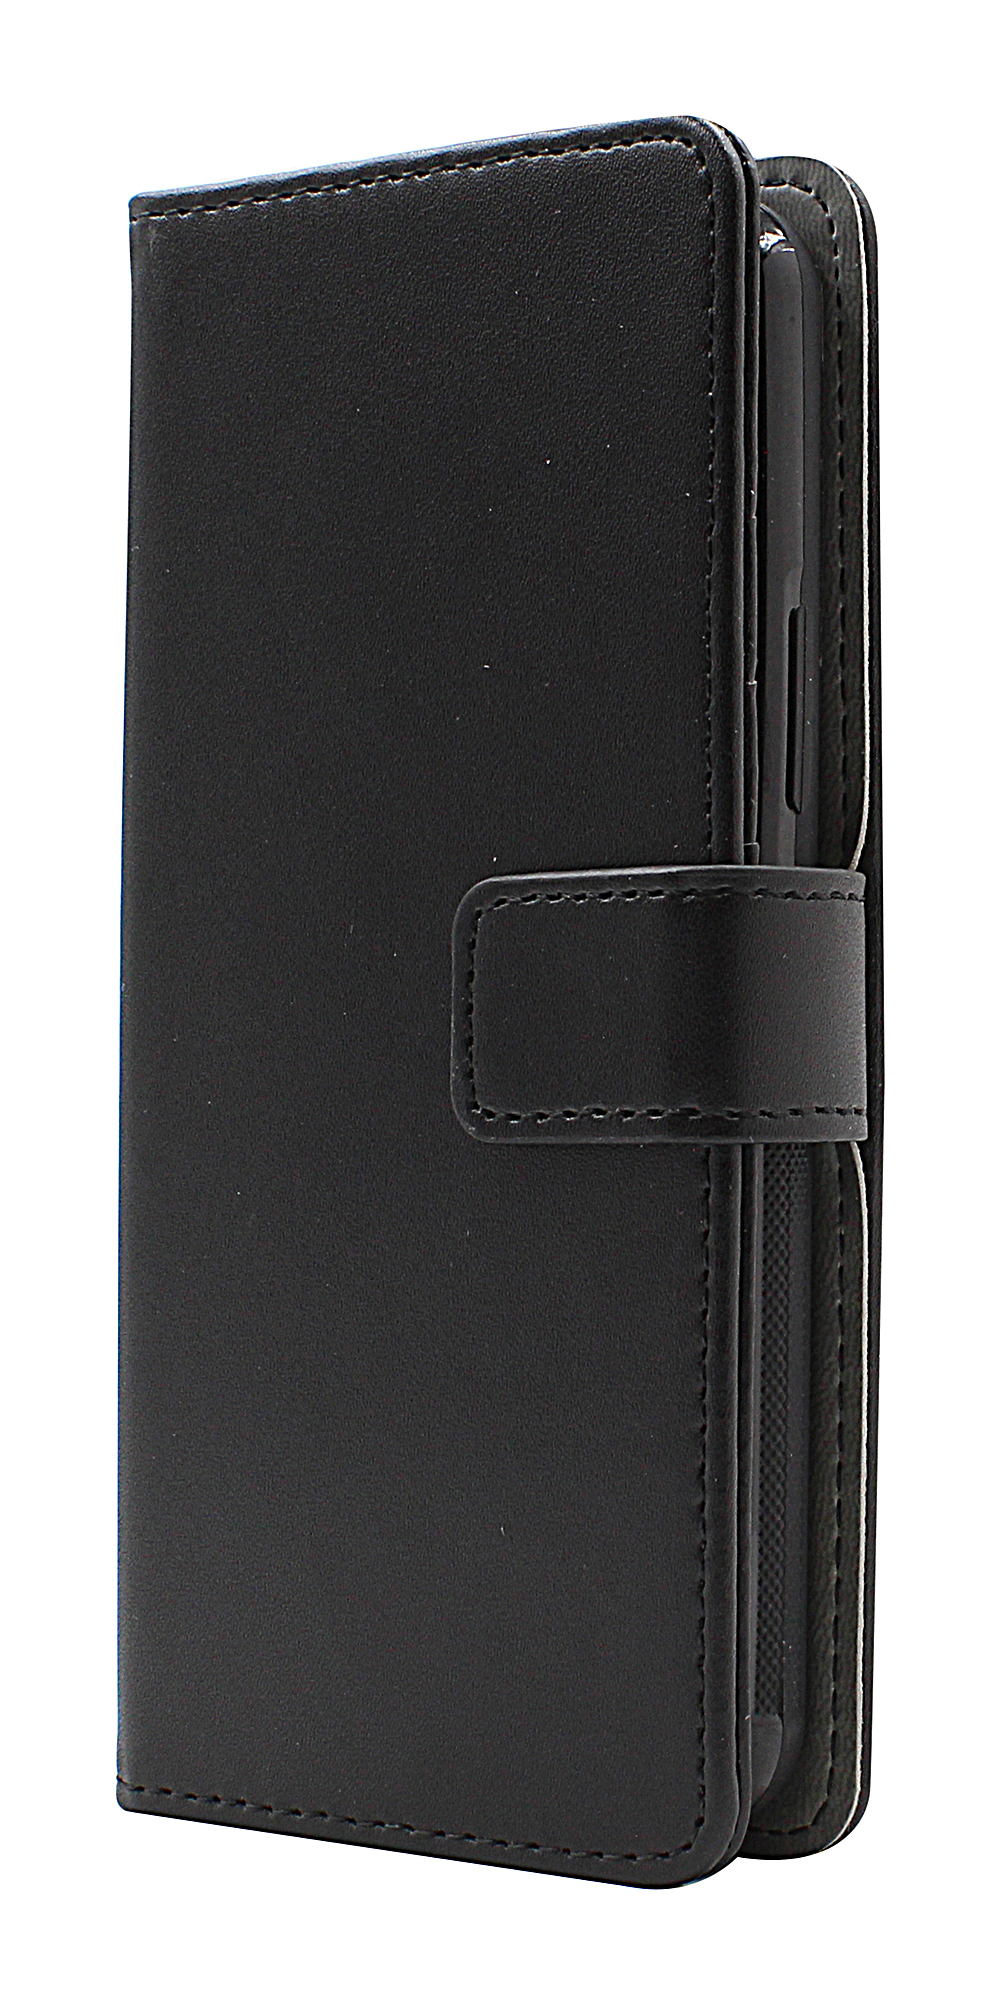 Skimblocker Magnet Wallet Samsung Galaxy S22 5G